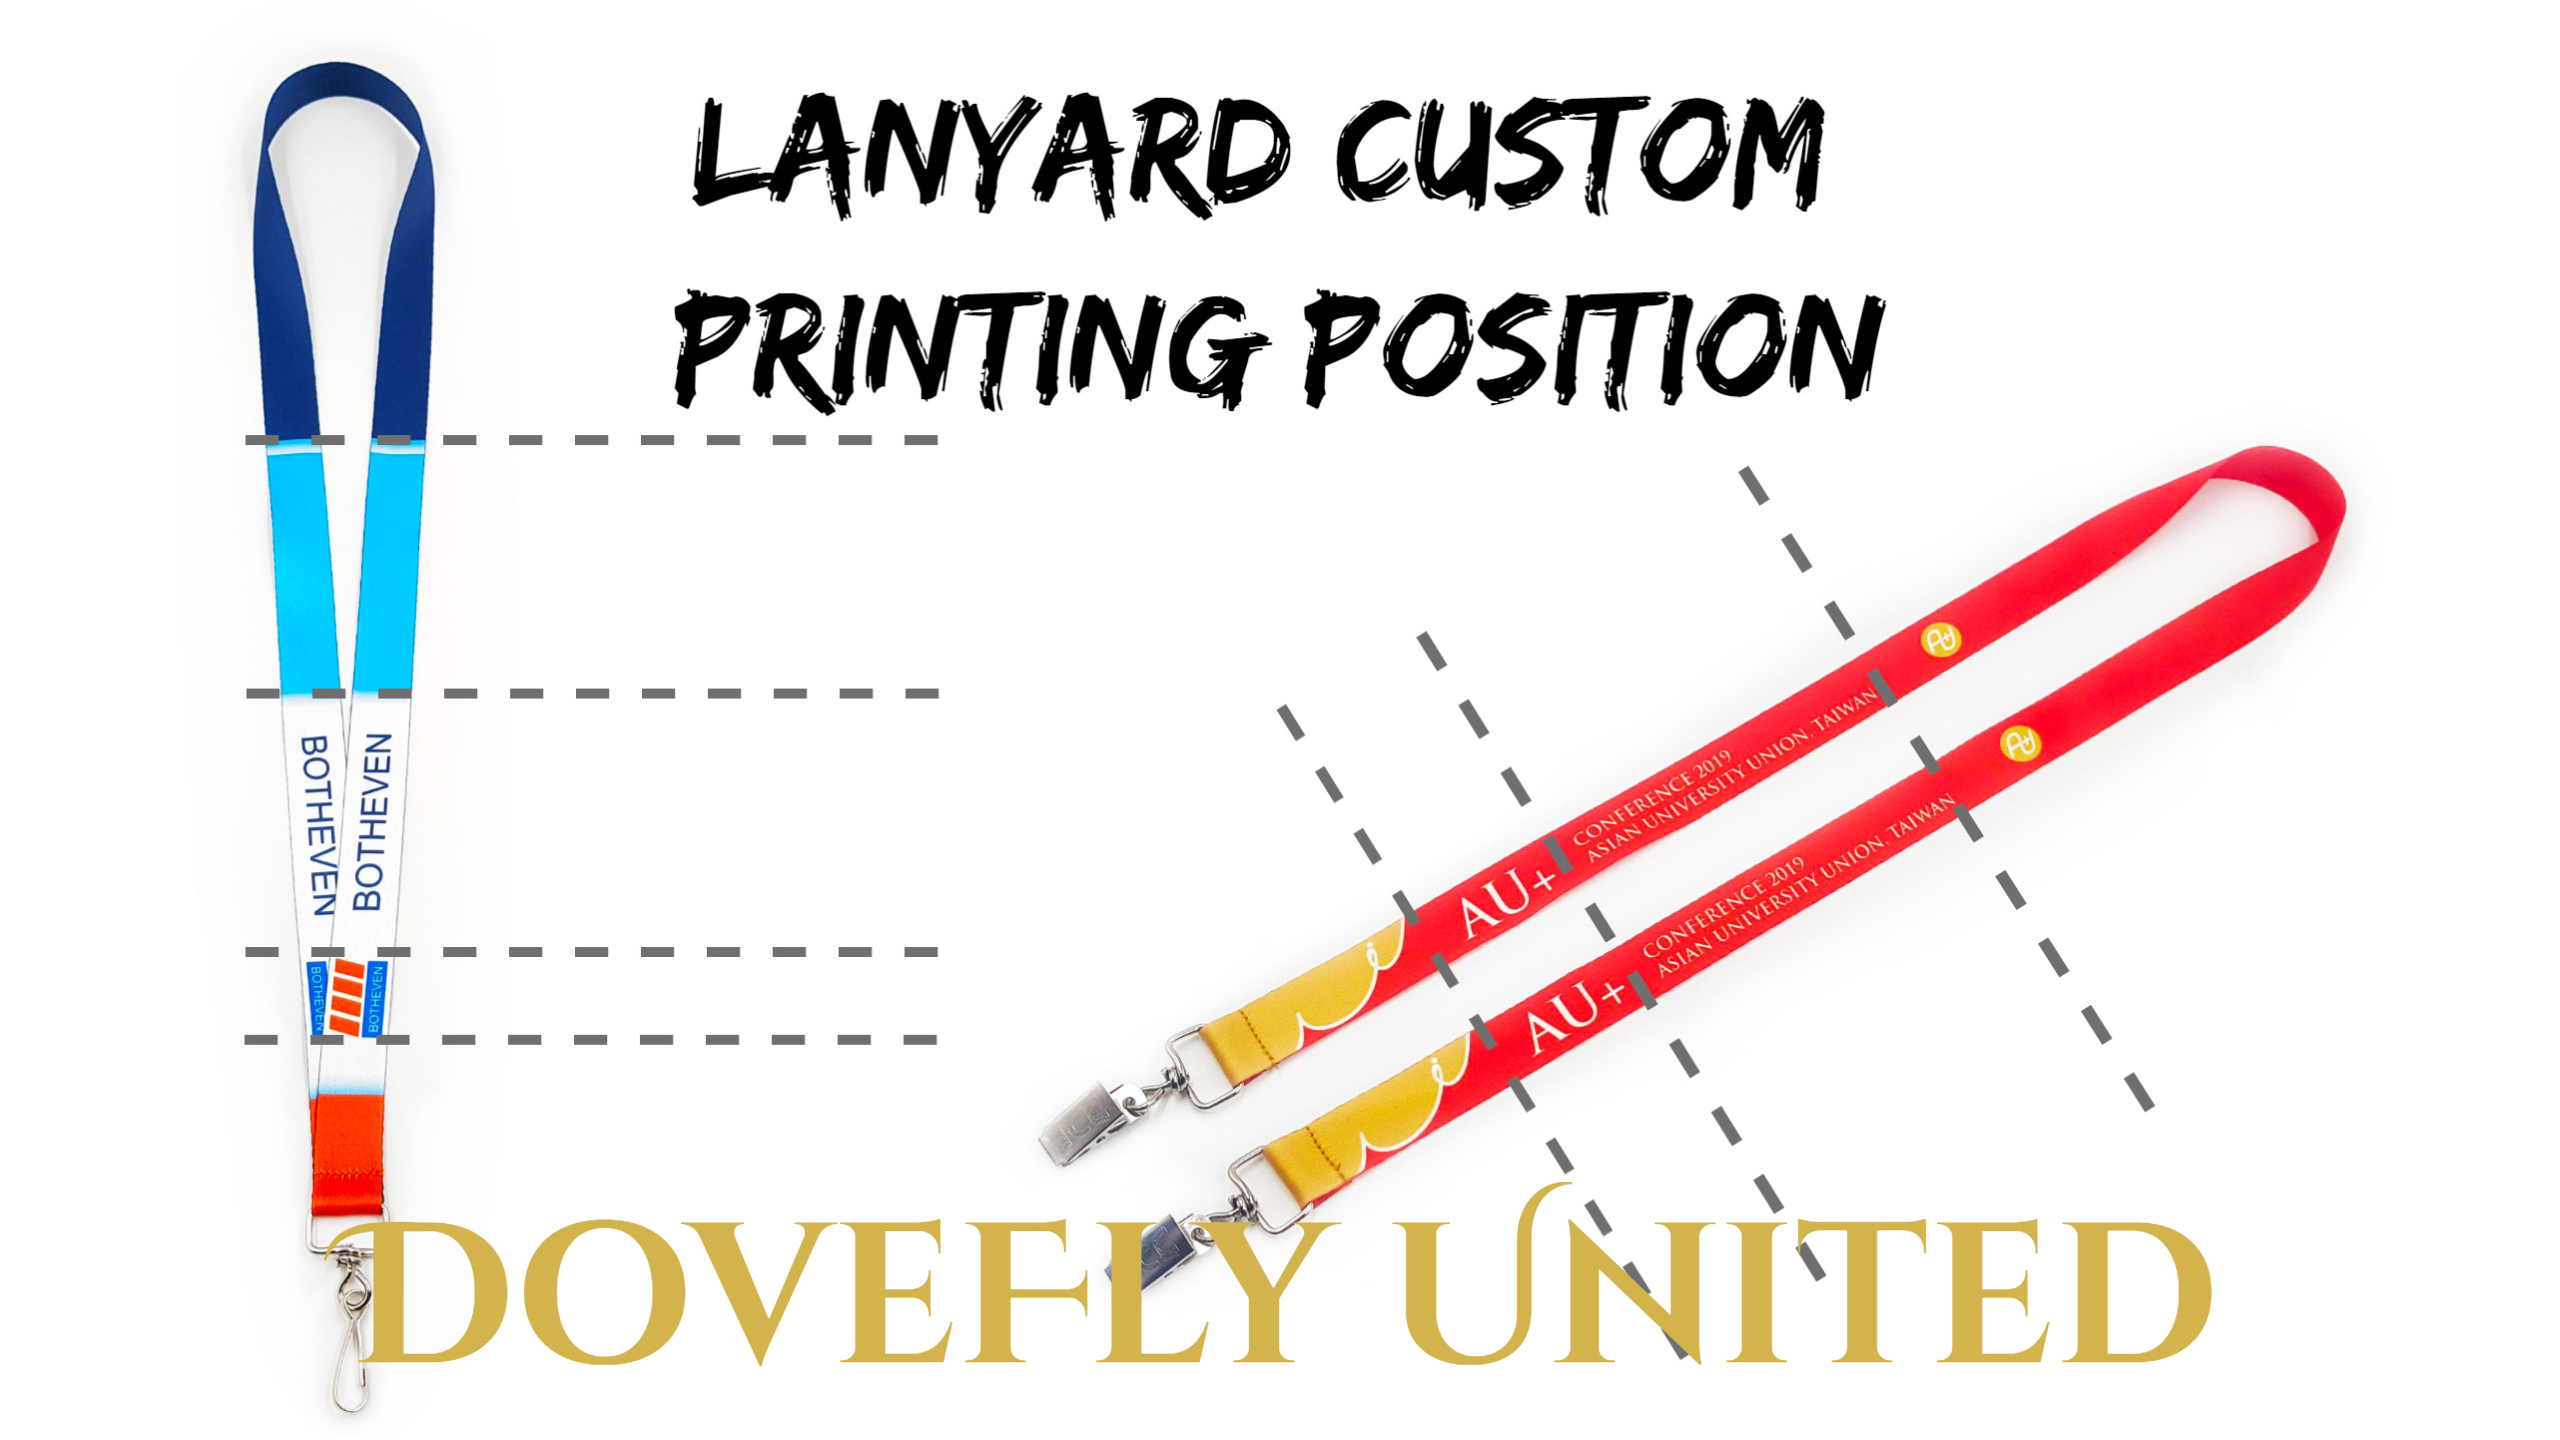 Lanyard Custom Printing Position